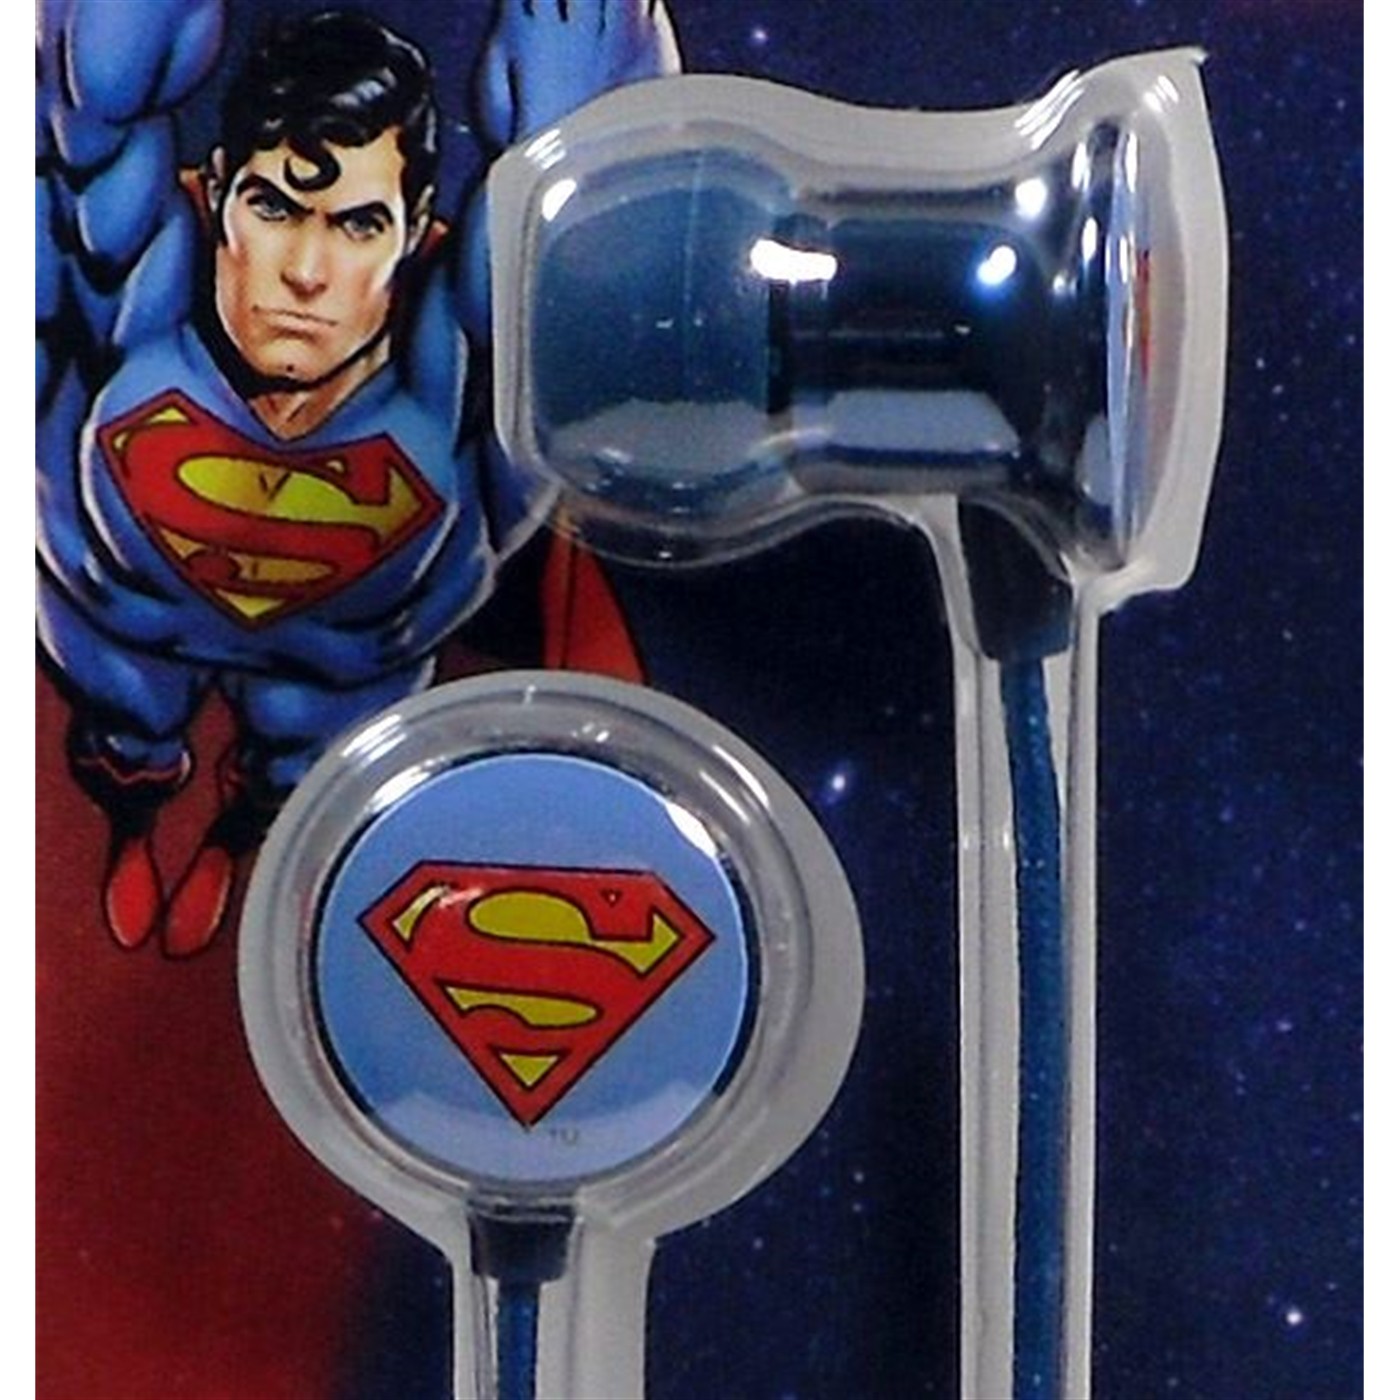 Superman Symbol Metal Earbuds